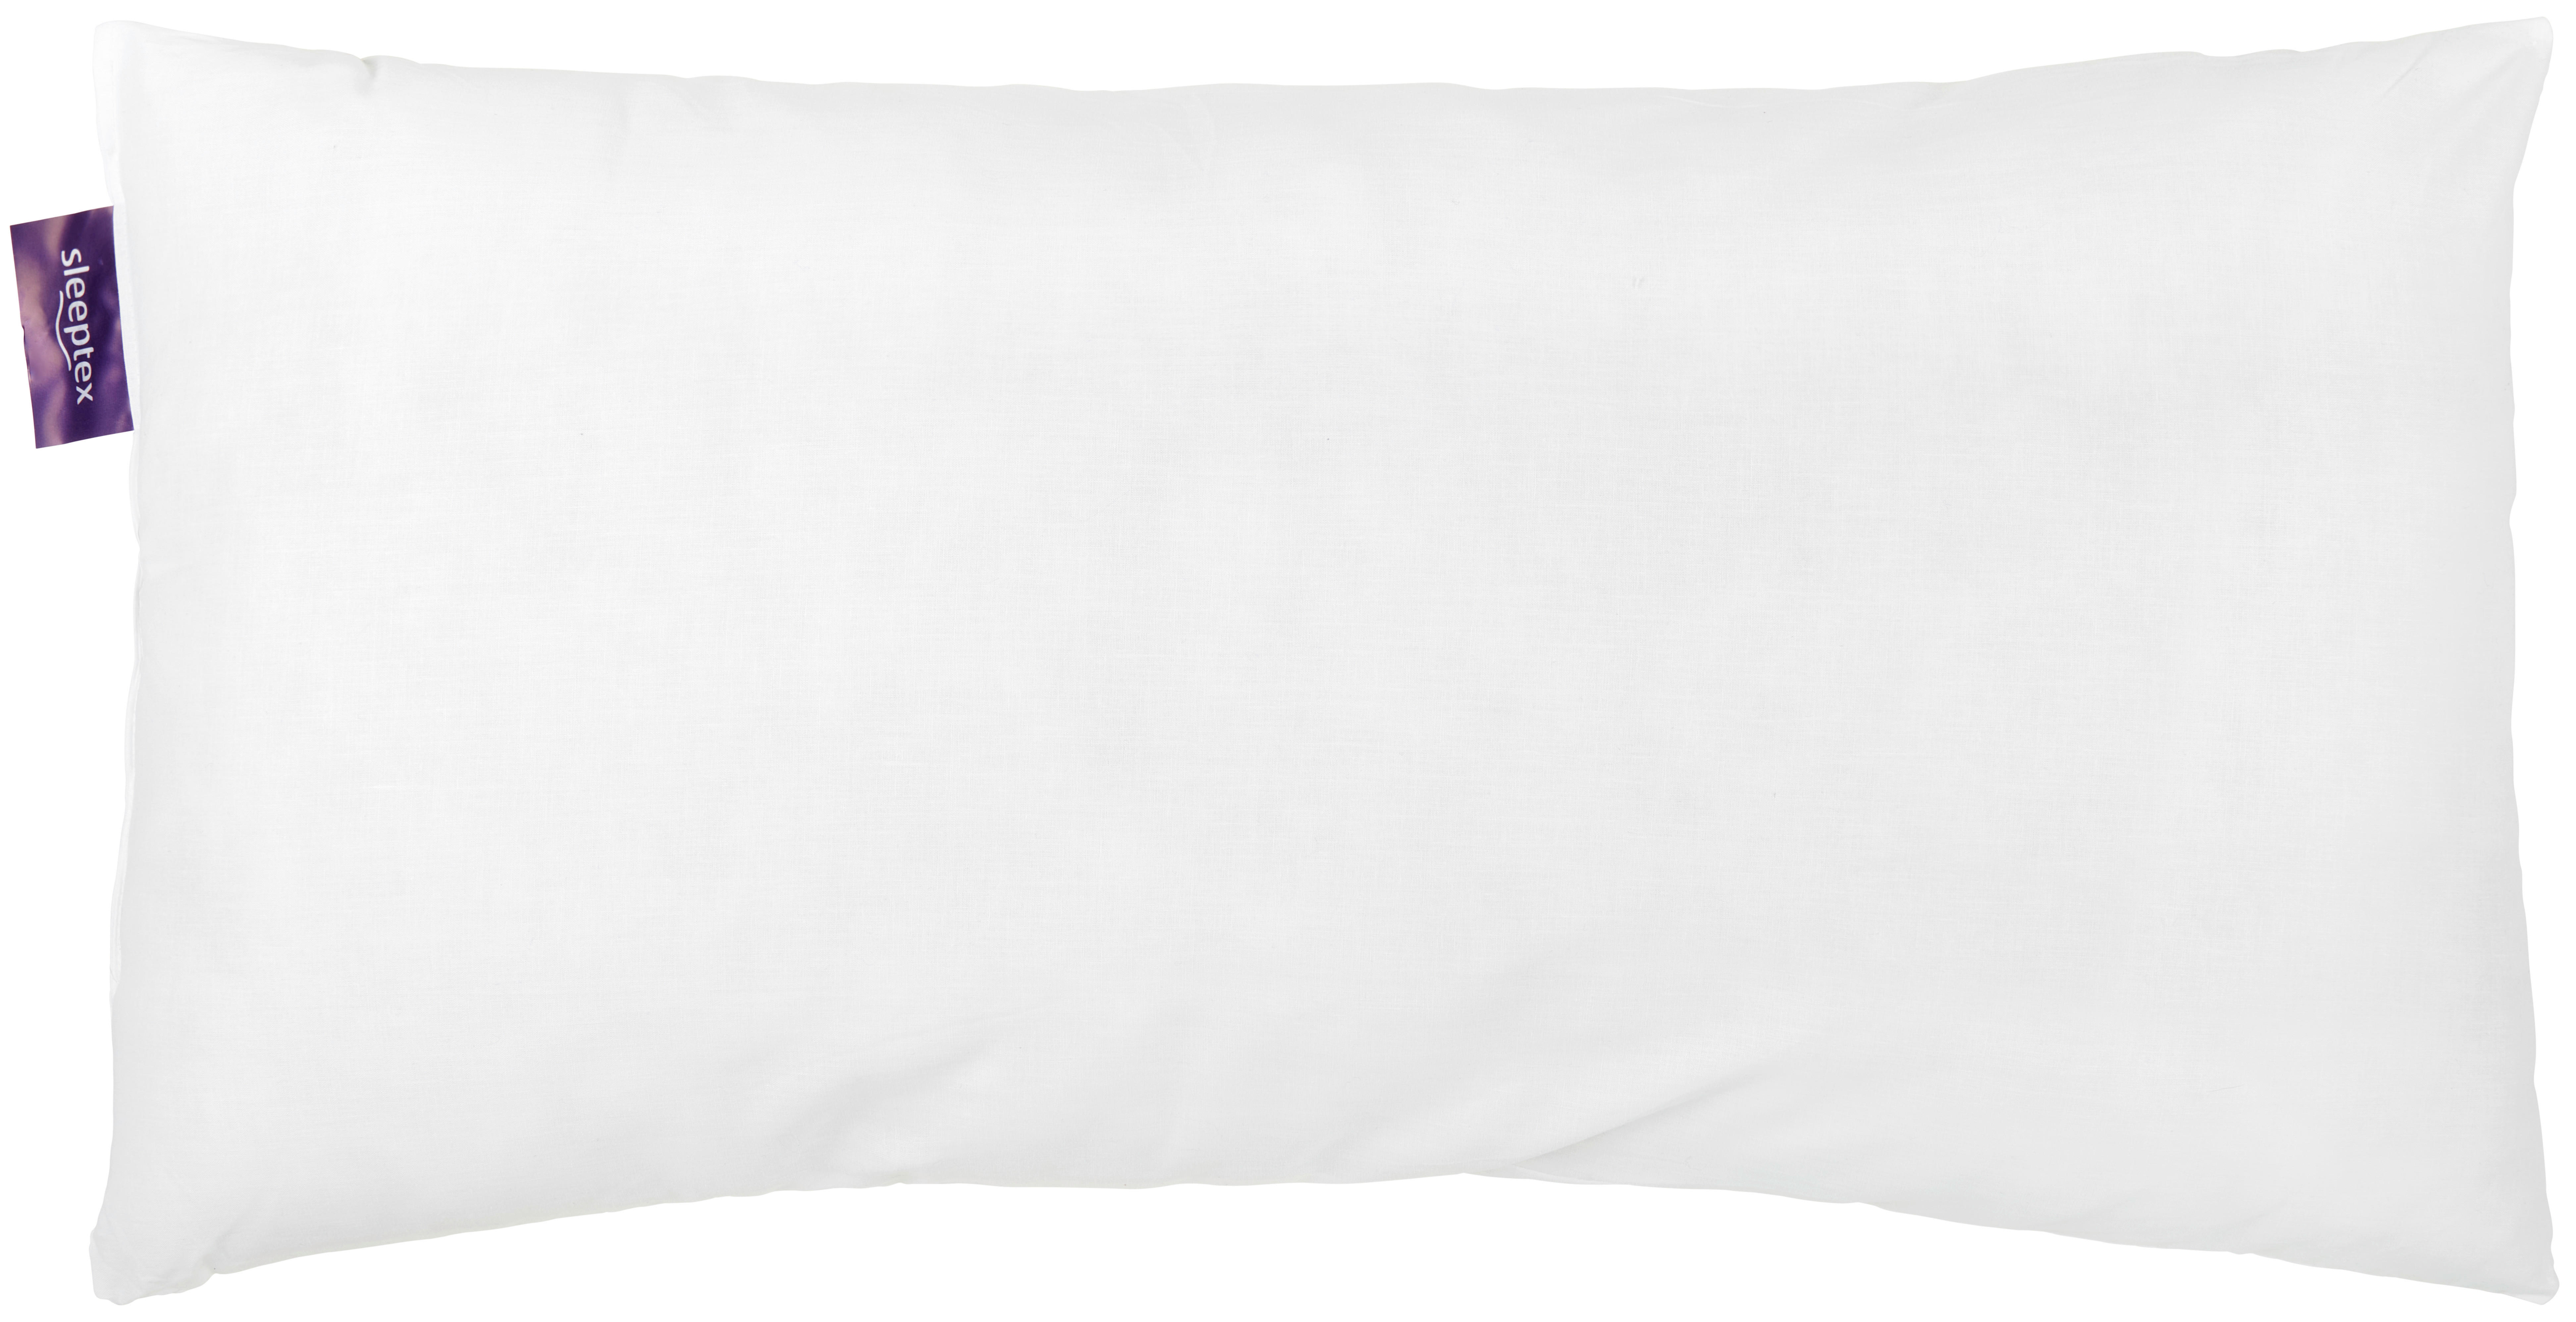 Sleeptex VÝPLŇ POLŠTÁŘE, 40/80 cm - bílá - polyester, polyester